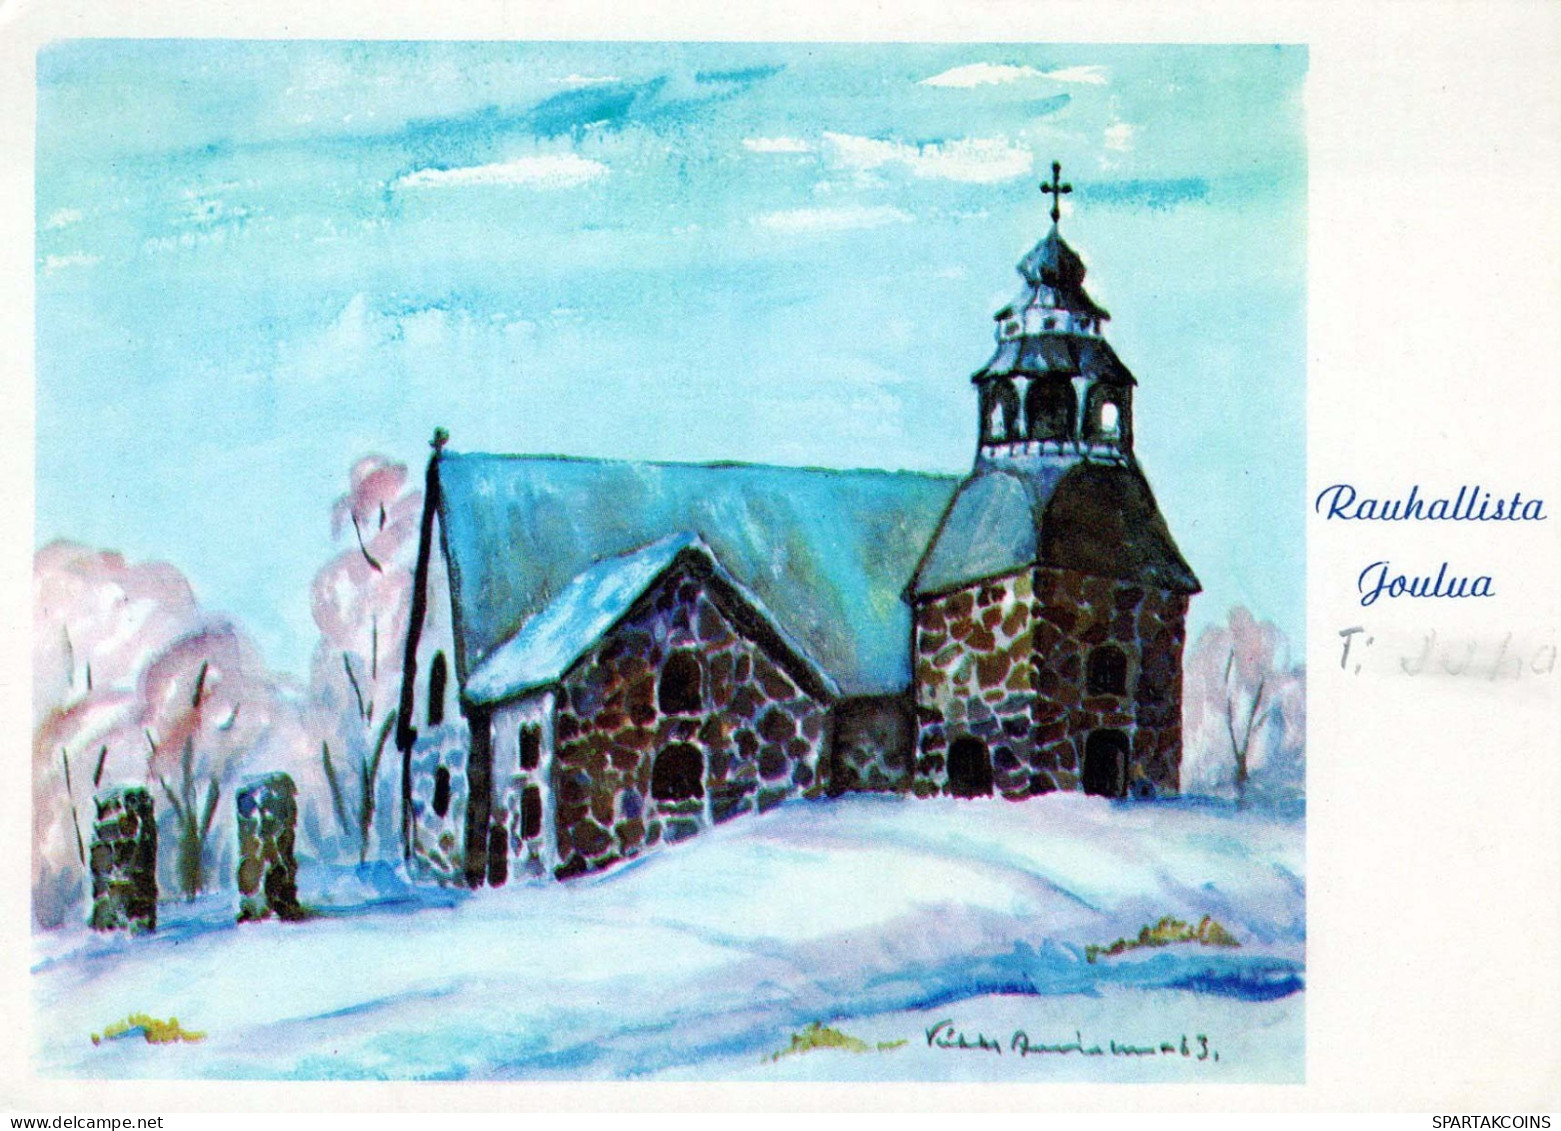 CHURCH Christianity Religion Vintage Postcard CPSM #PBQ093.A - Churches & Convents